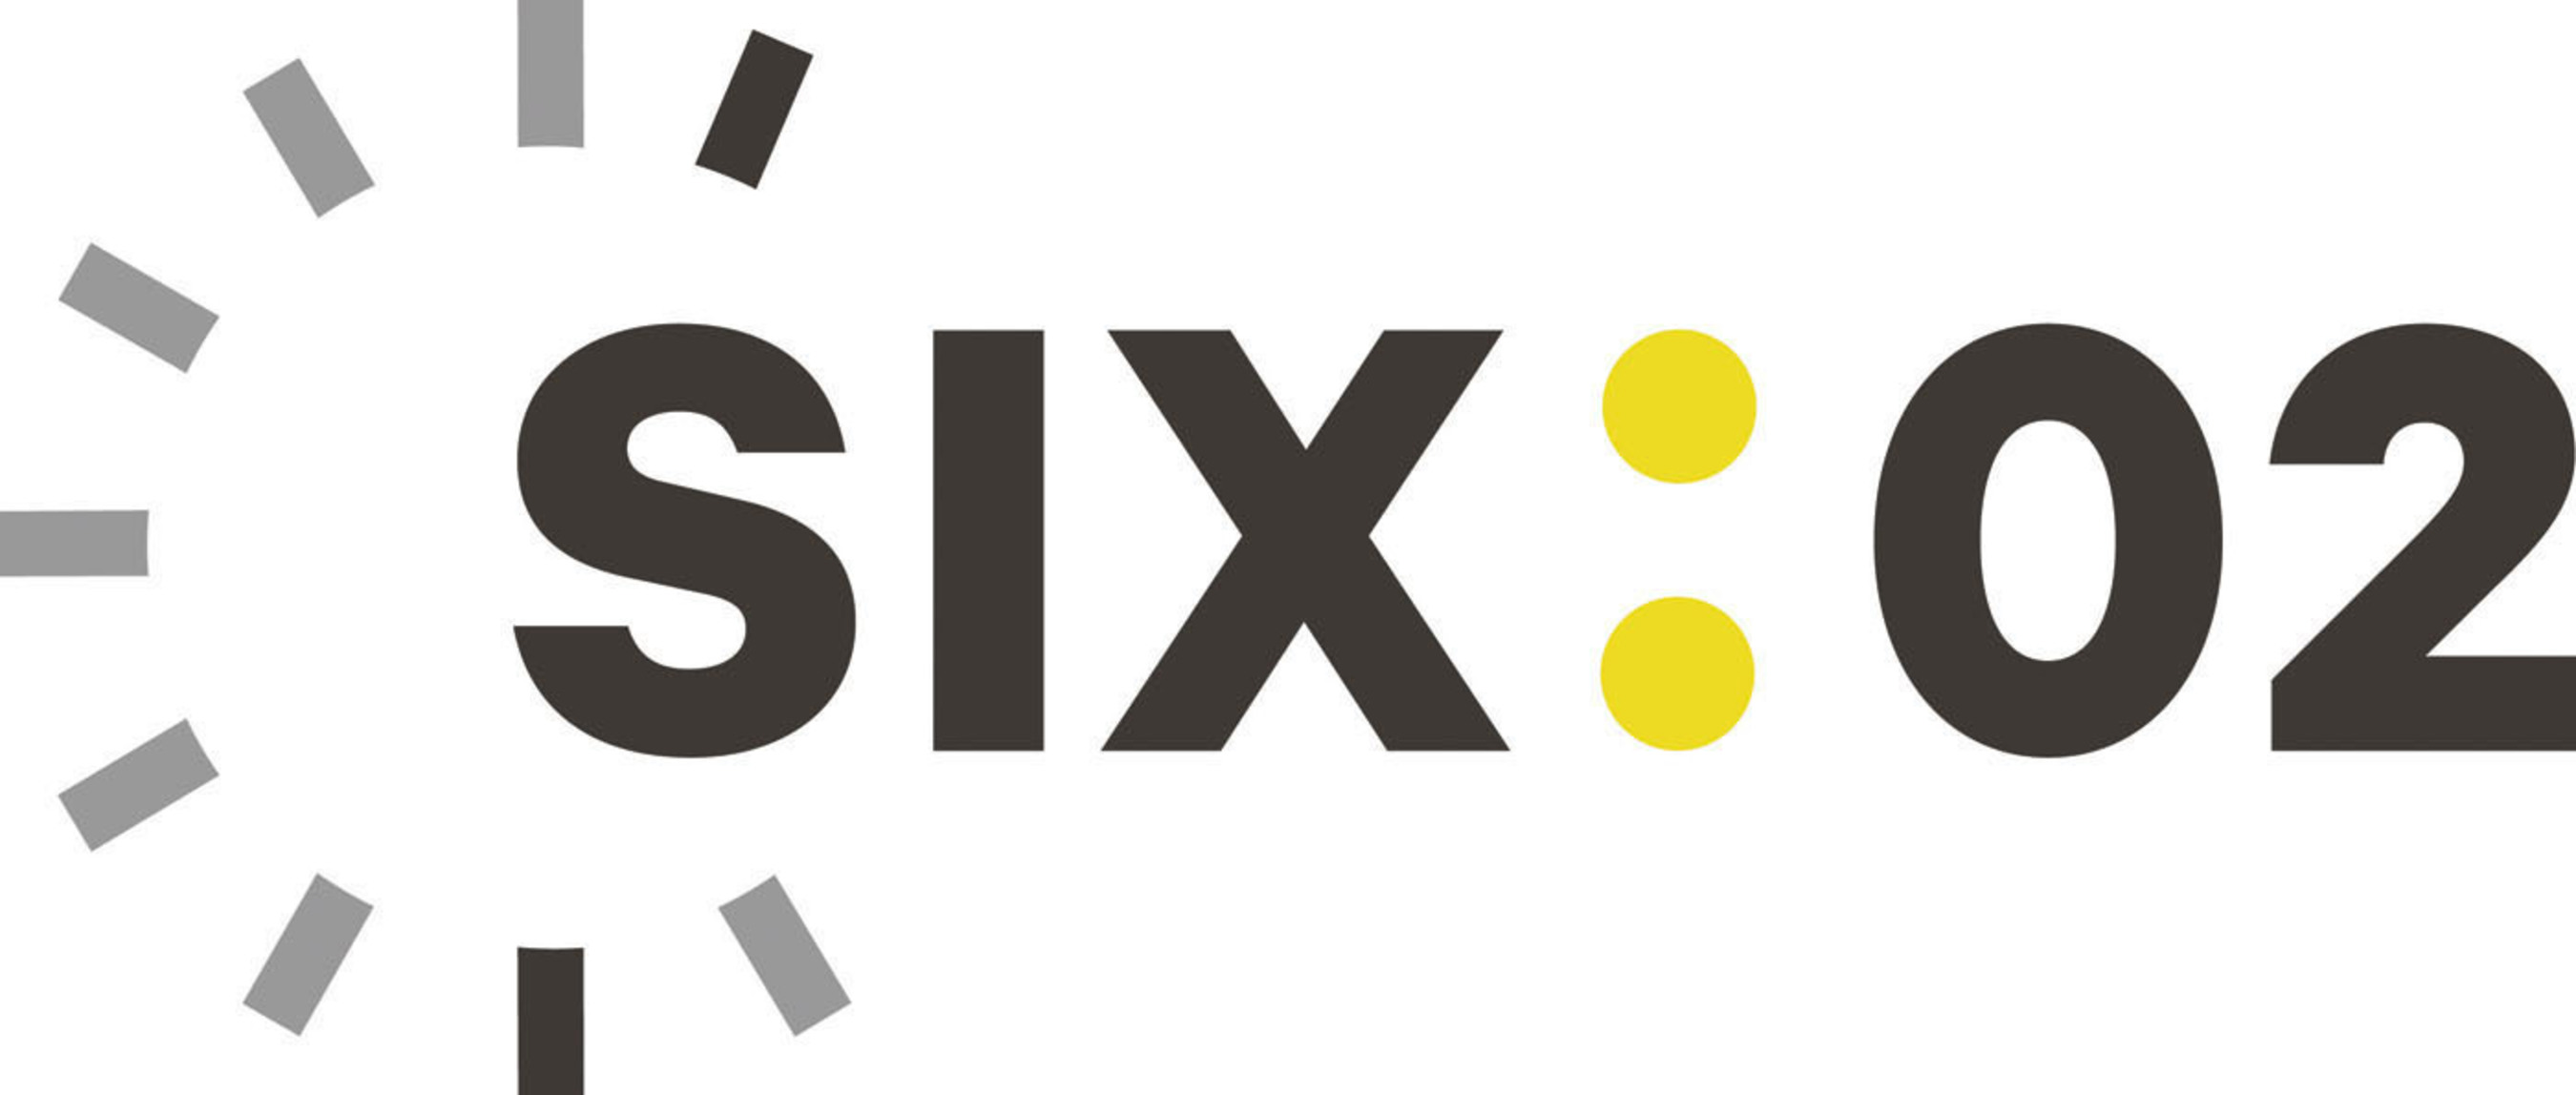 Six second. Six point Six лого. 2 Недели лого. 6k logo. Pyside6 logo PNG.